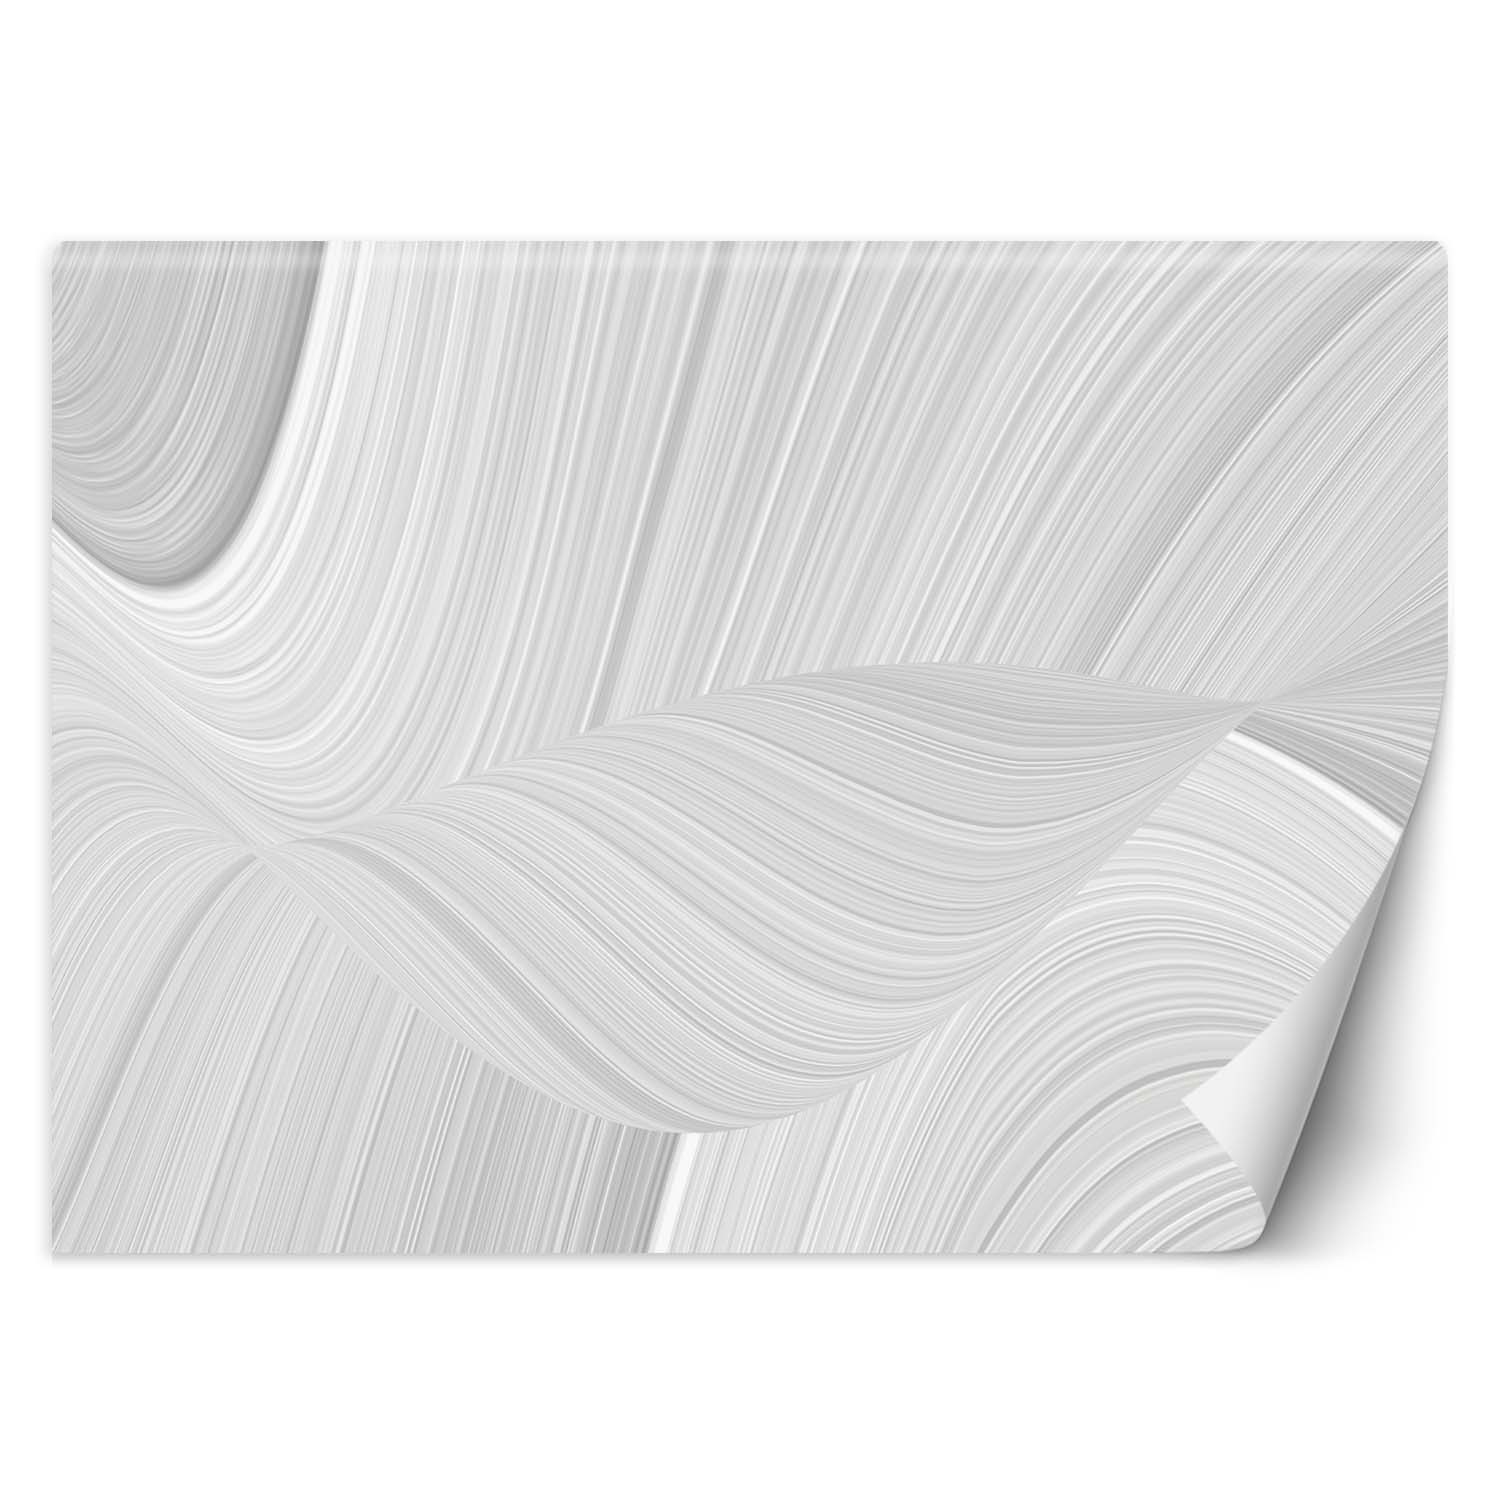 Trend24 – Behang – Texture Blur – Vliesbehang – Fotobehang 3D – Behang Woonkamer – 450×315 cm – Incl. behanglijm